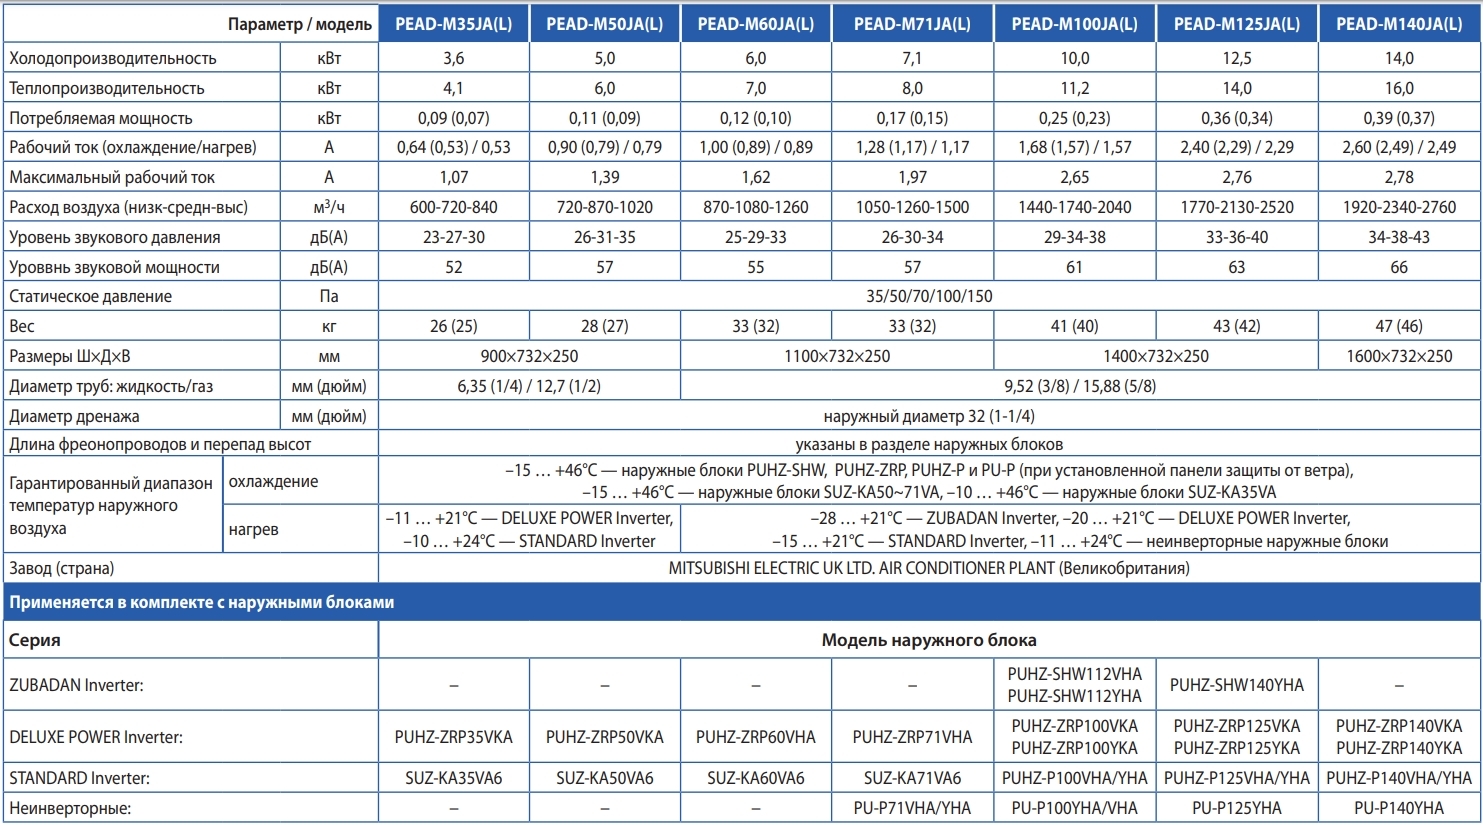 Mitsubishi Electric PEAD-M140JA/PUHZ-P140YKA Характеристики